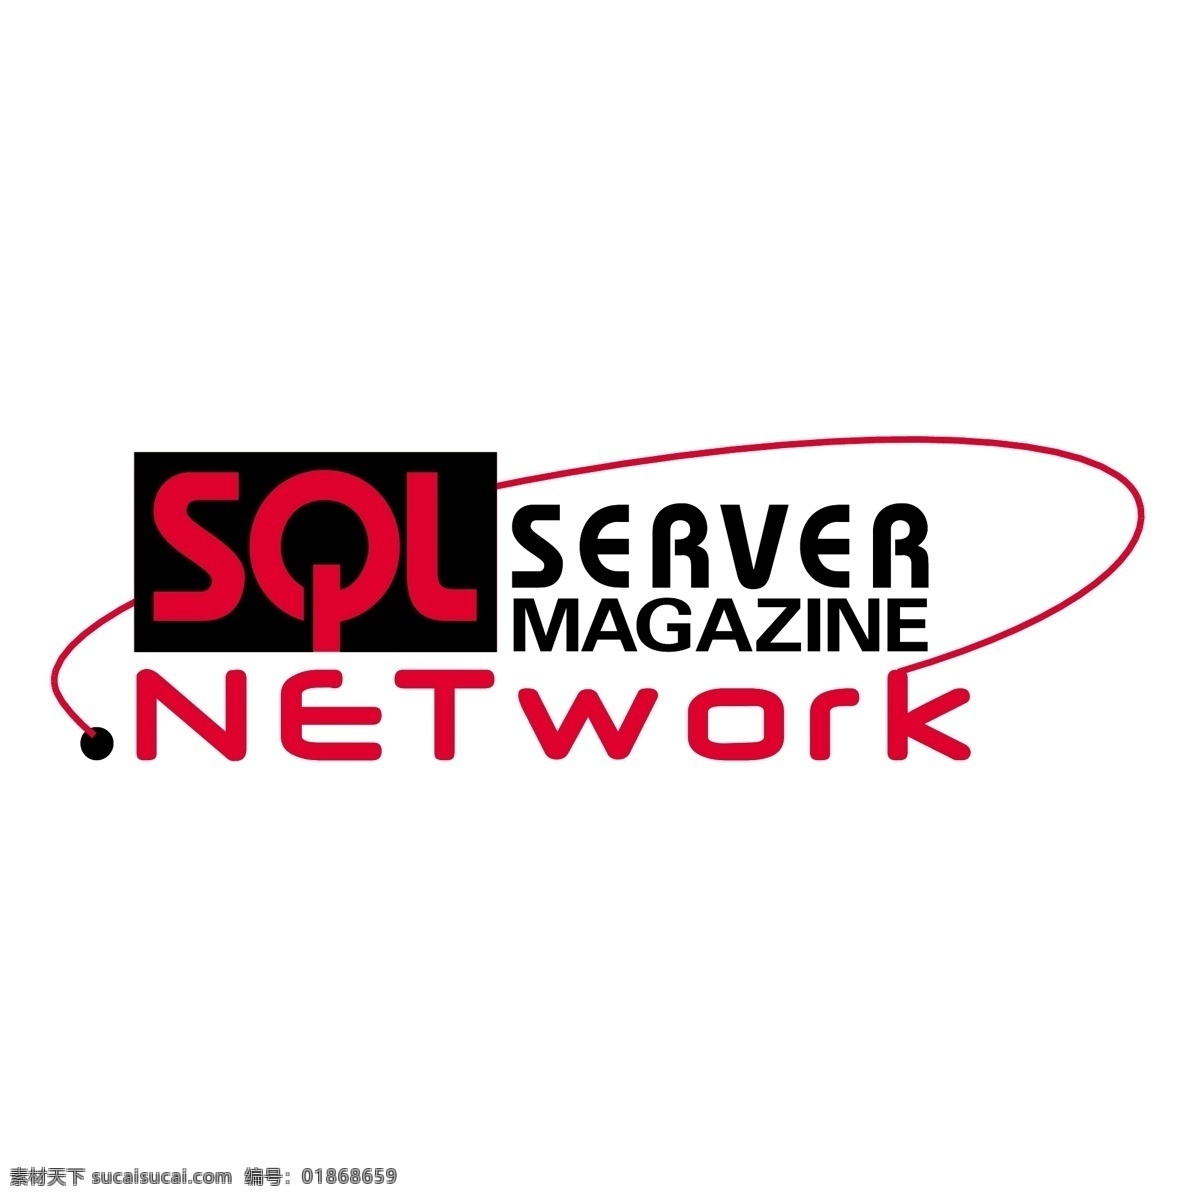 sql 服务器 网络 杂志 server 矢量图 其他矢量图